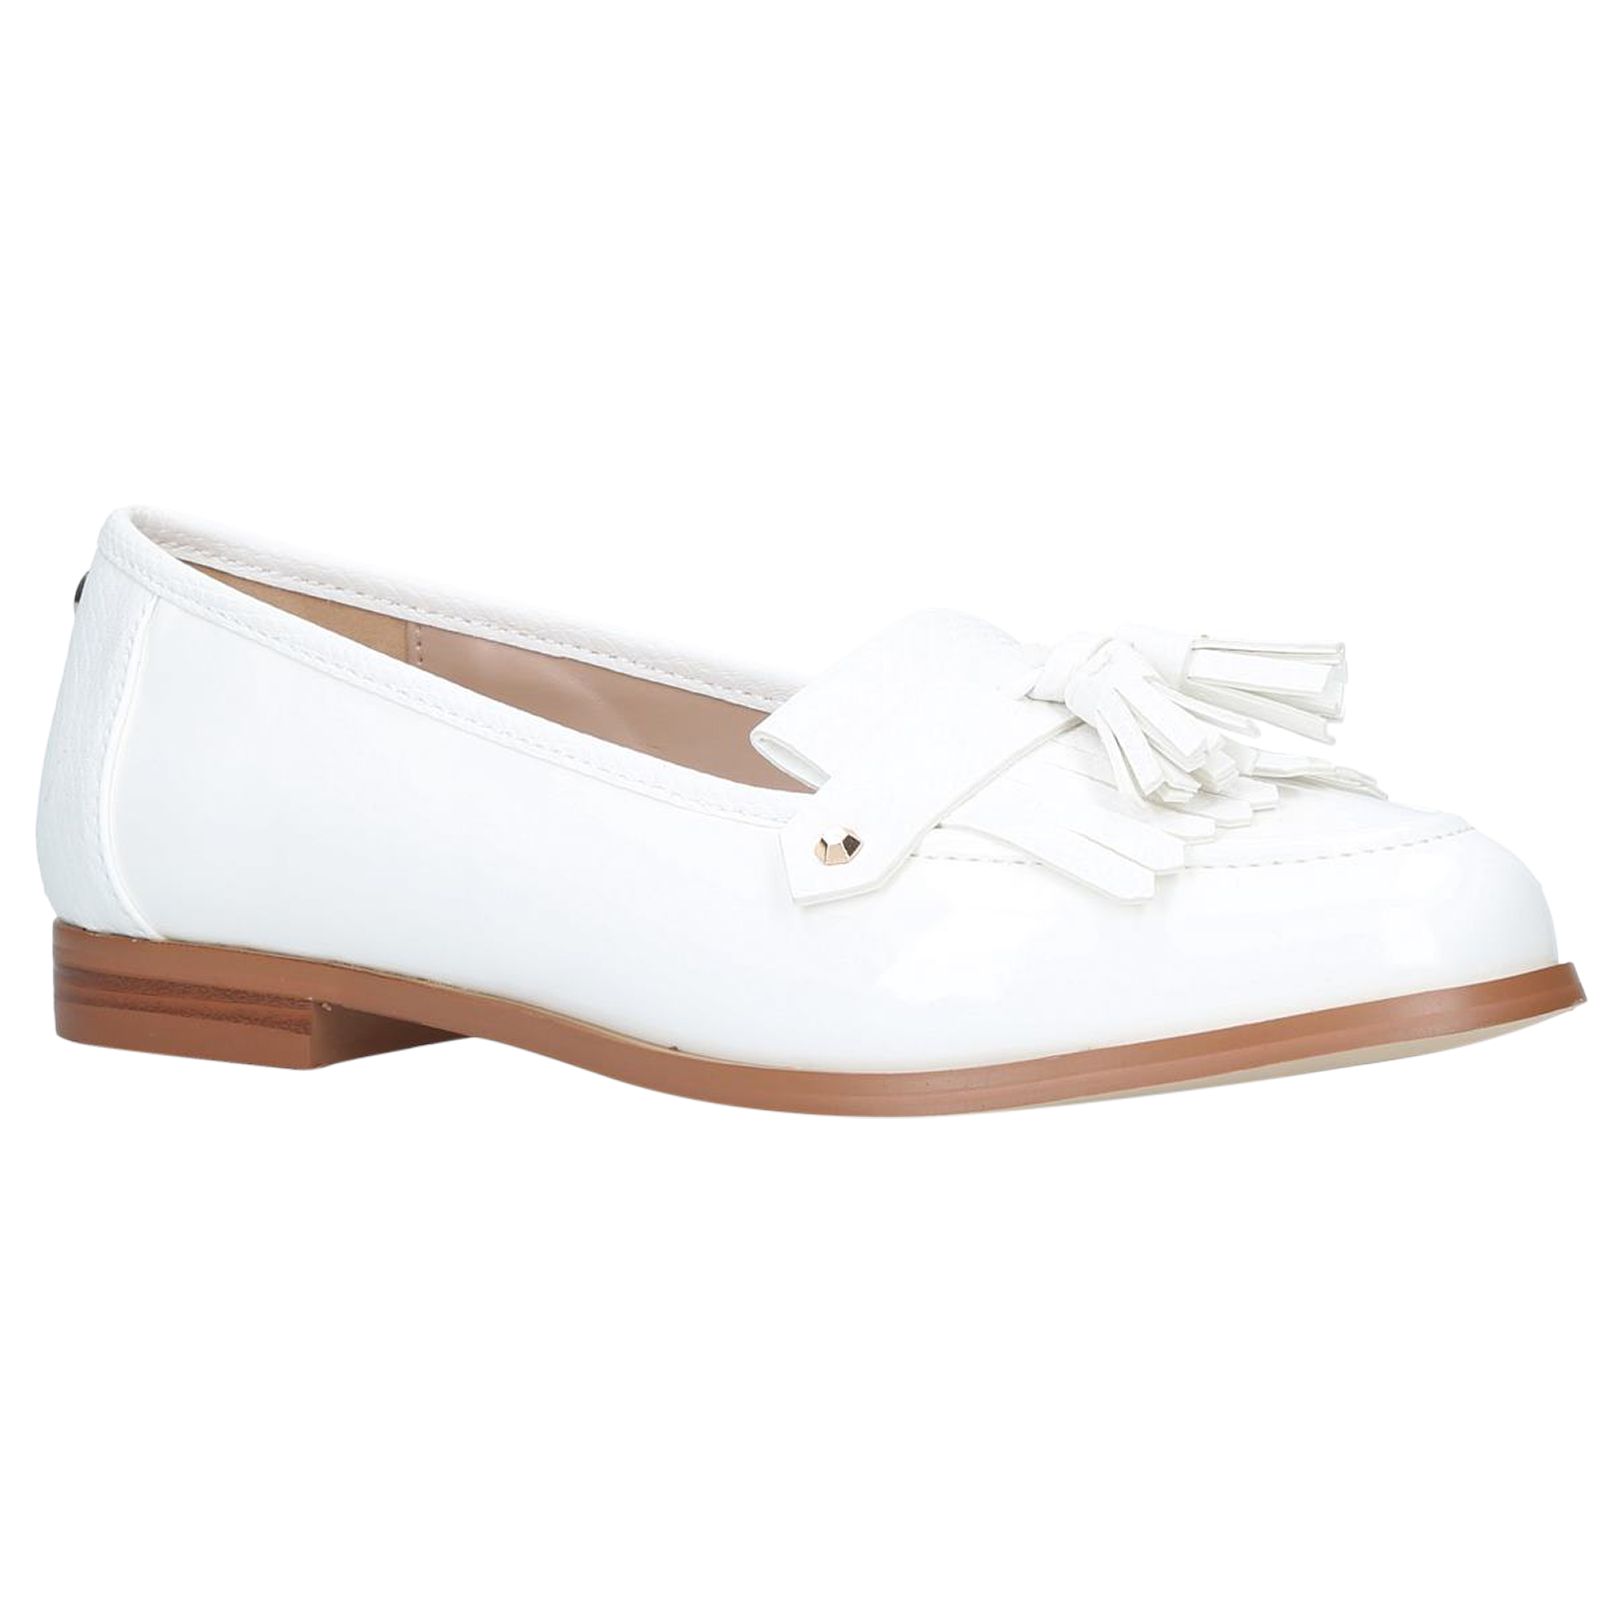 Carvela Magpie Tassel Loafers, White